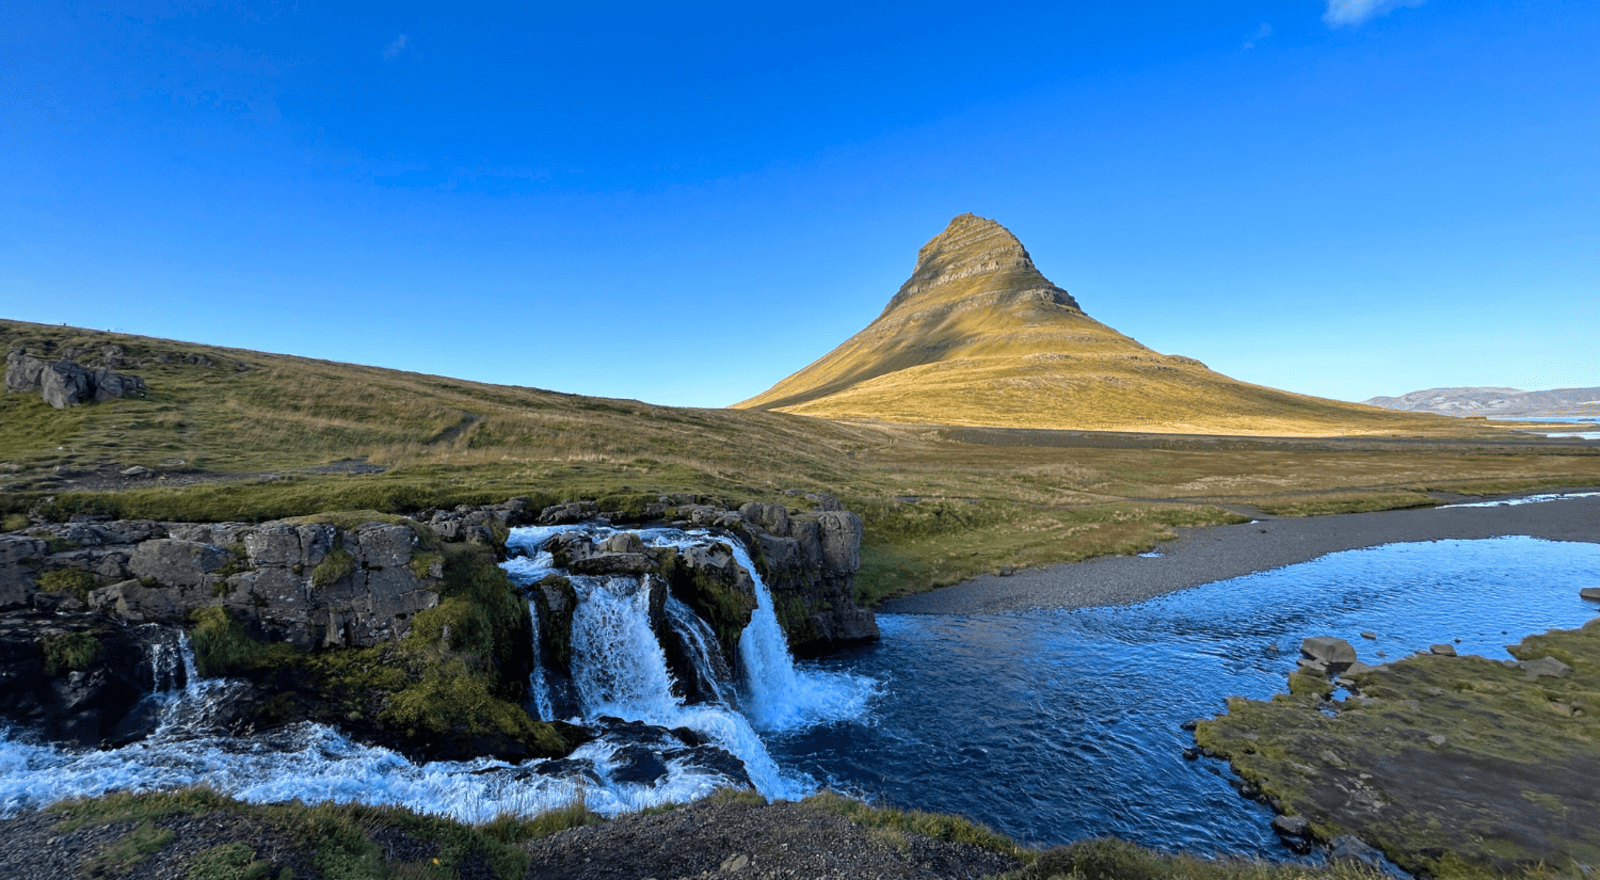 Kirkjufell mountain against a blue sky on the Snæfellsnes Peninsula in Iceland